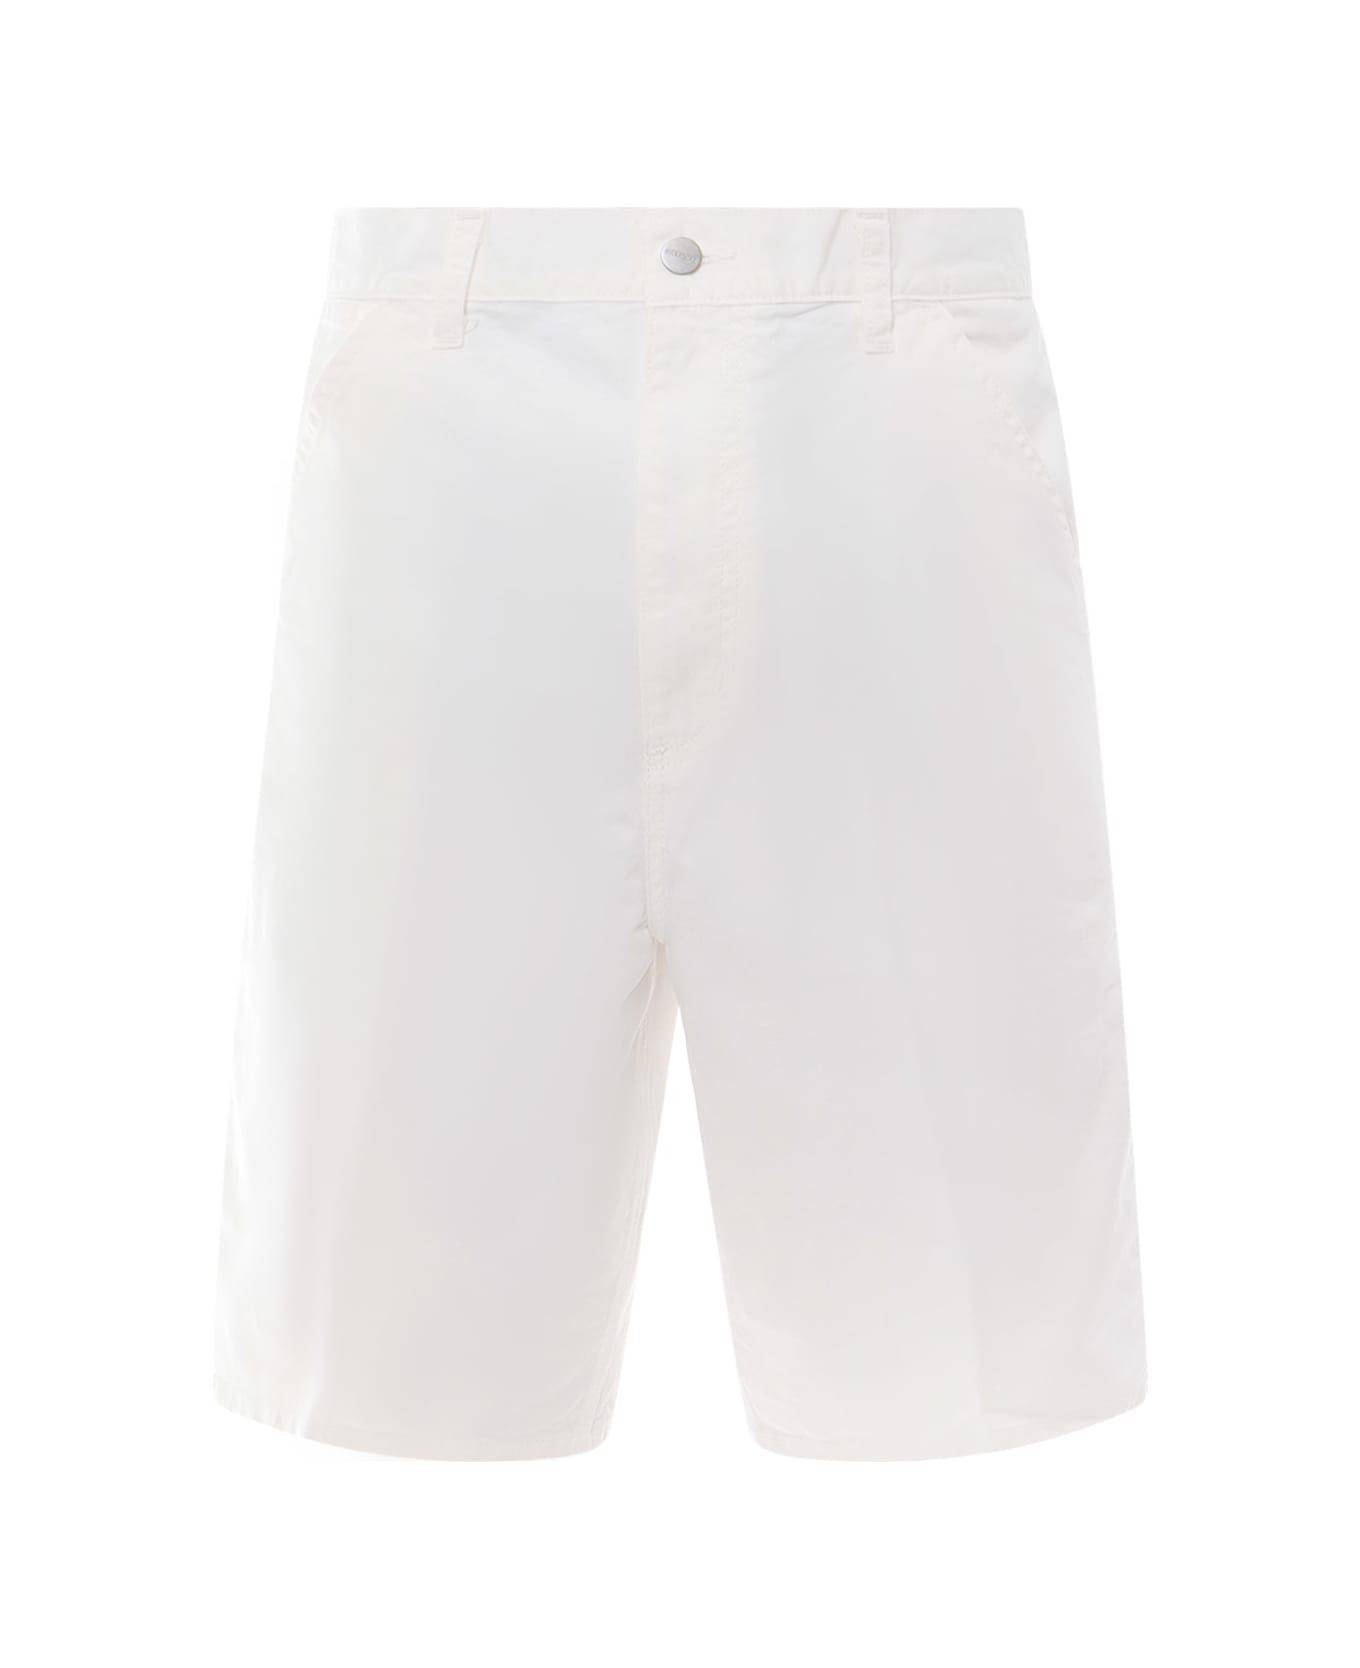 Carhartt Bermuda Shorts - White ショートパンツ